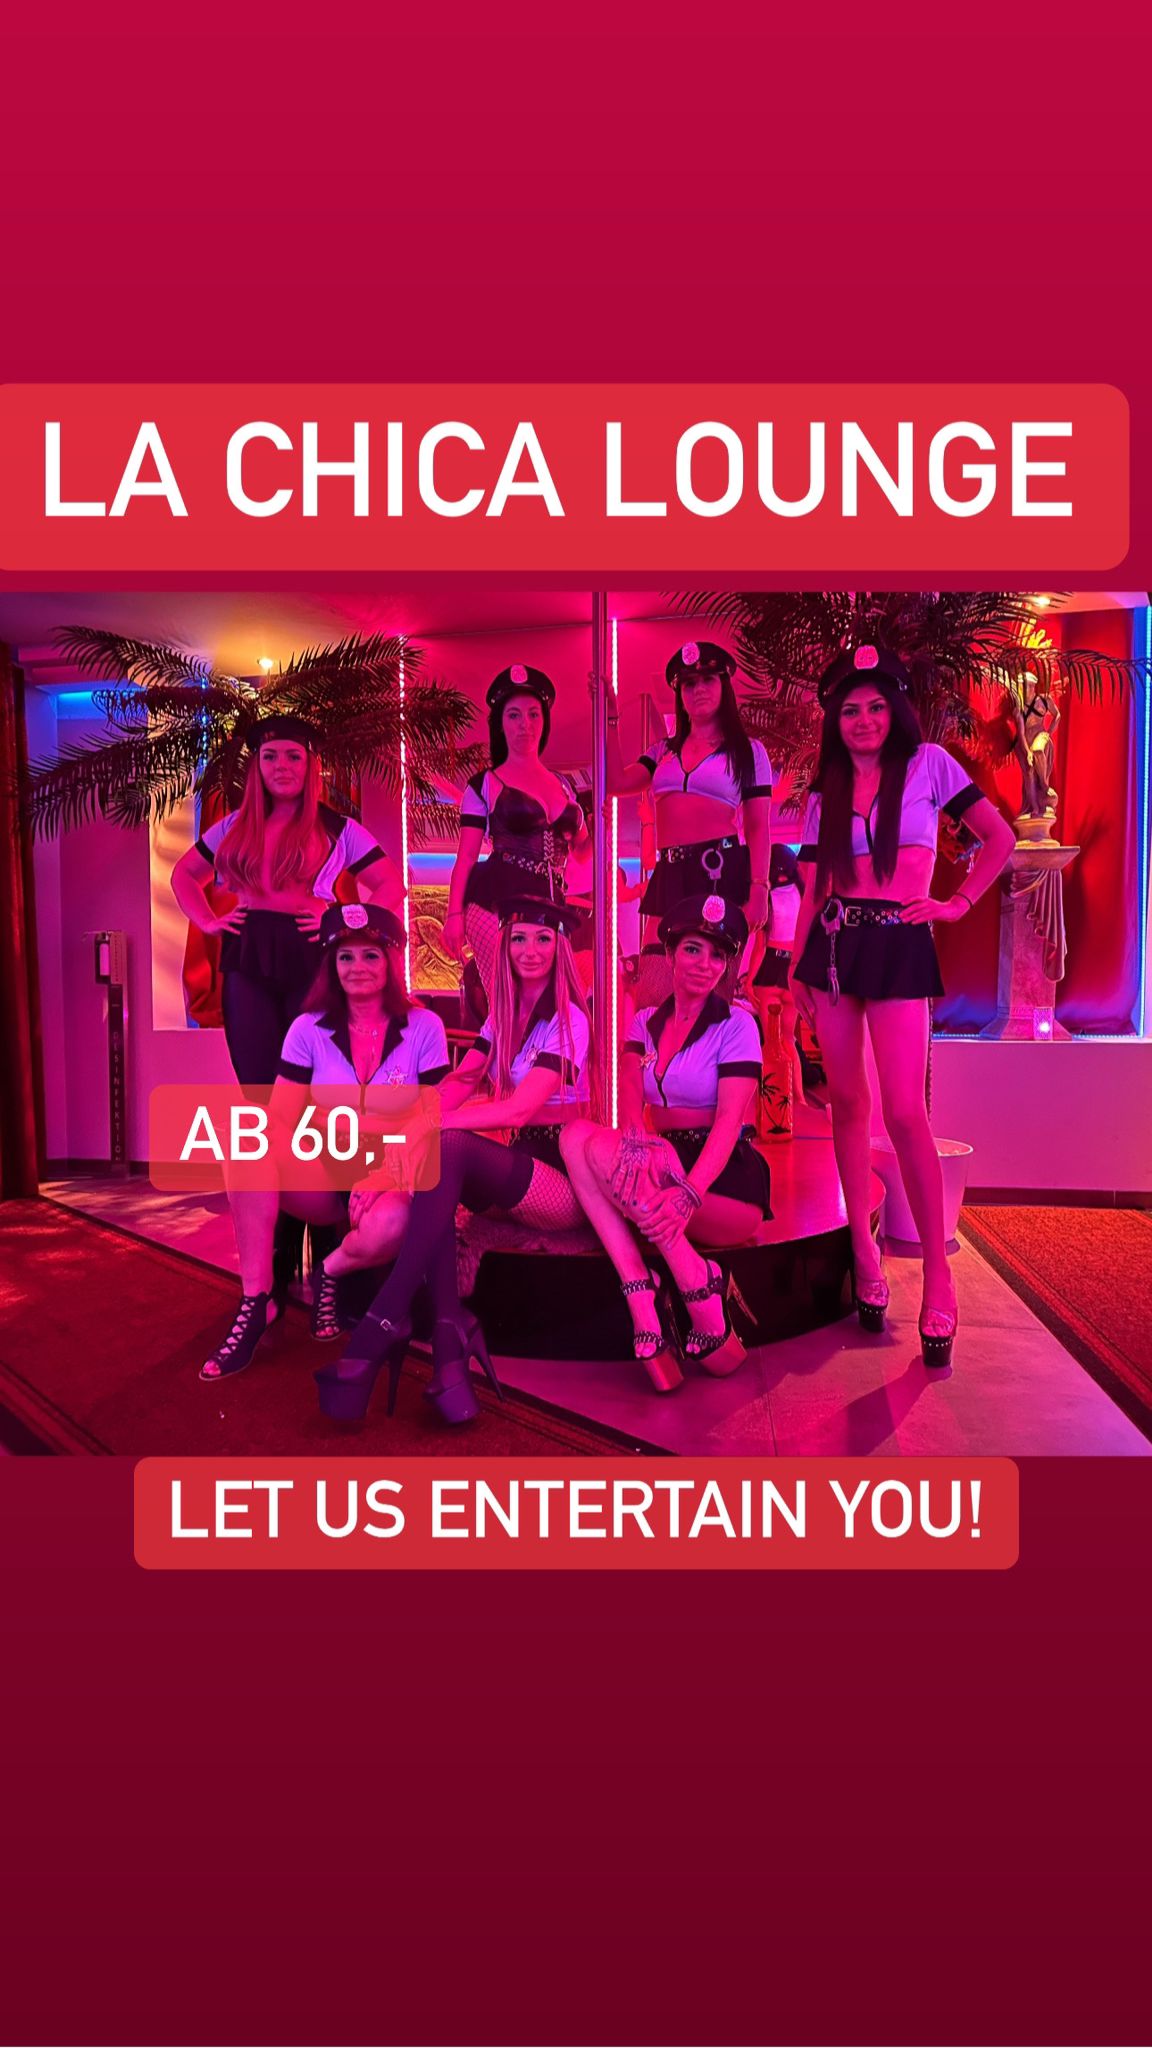 La Chica Lounge